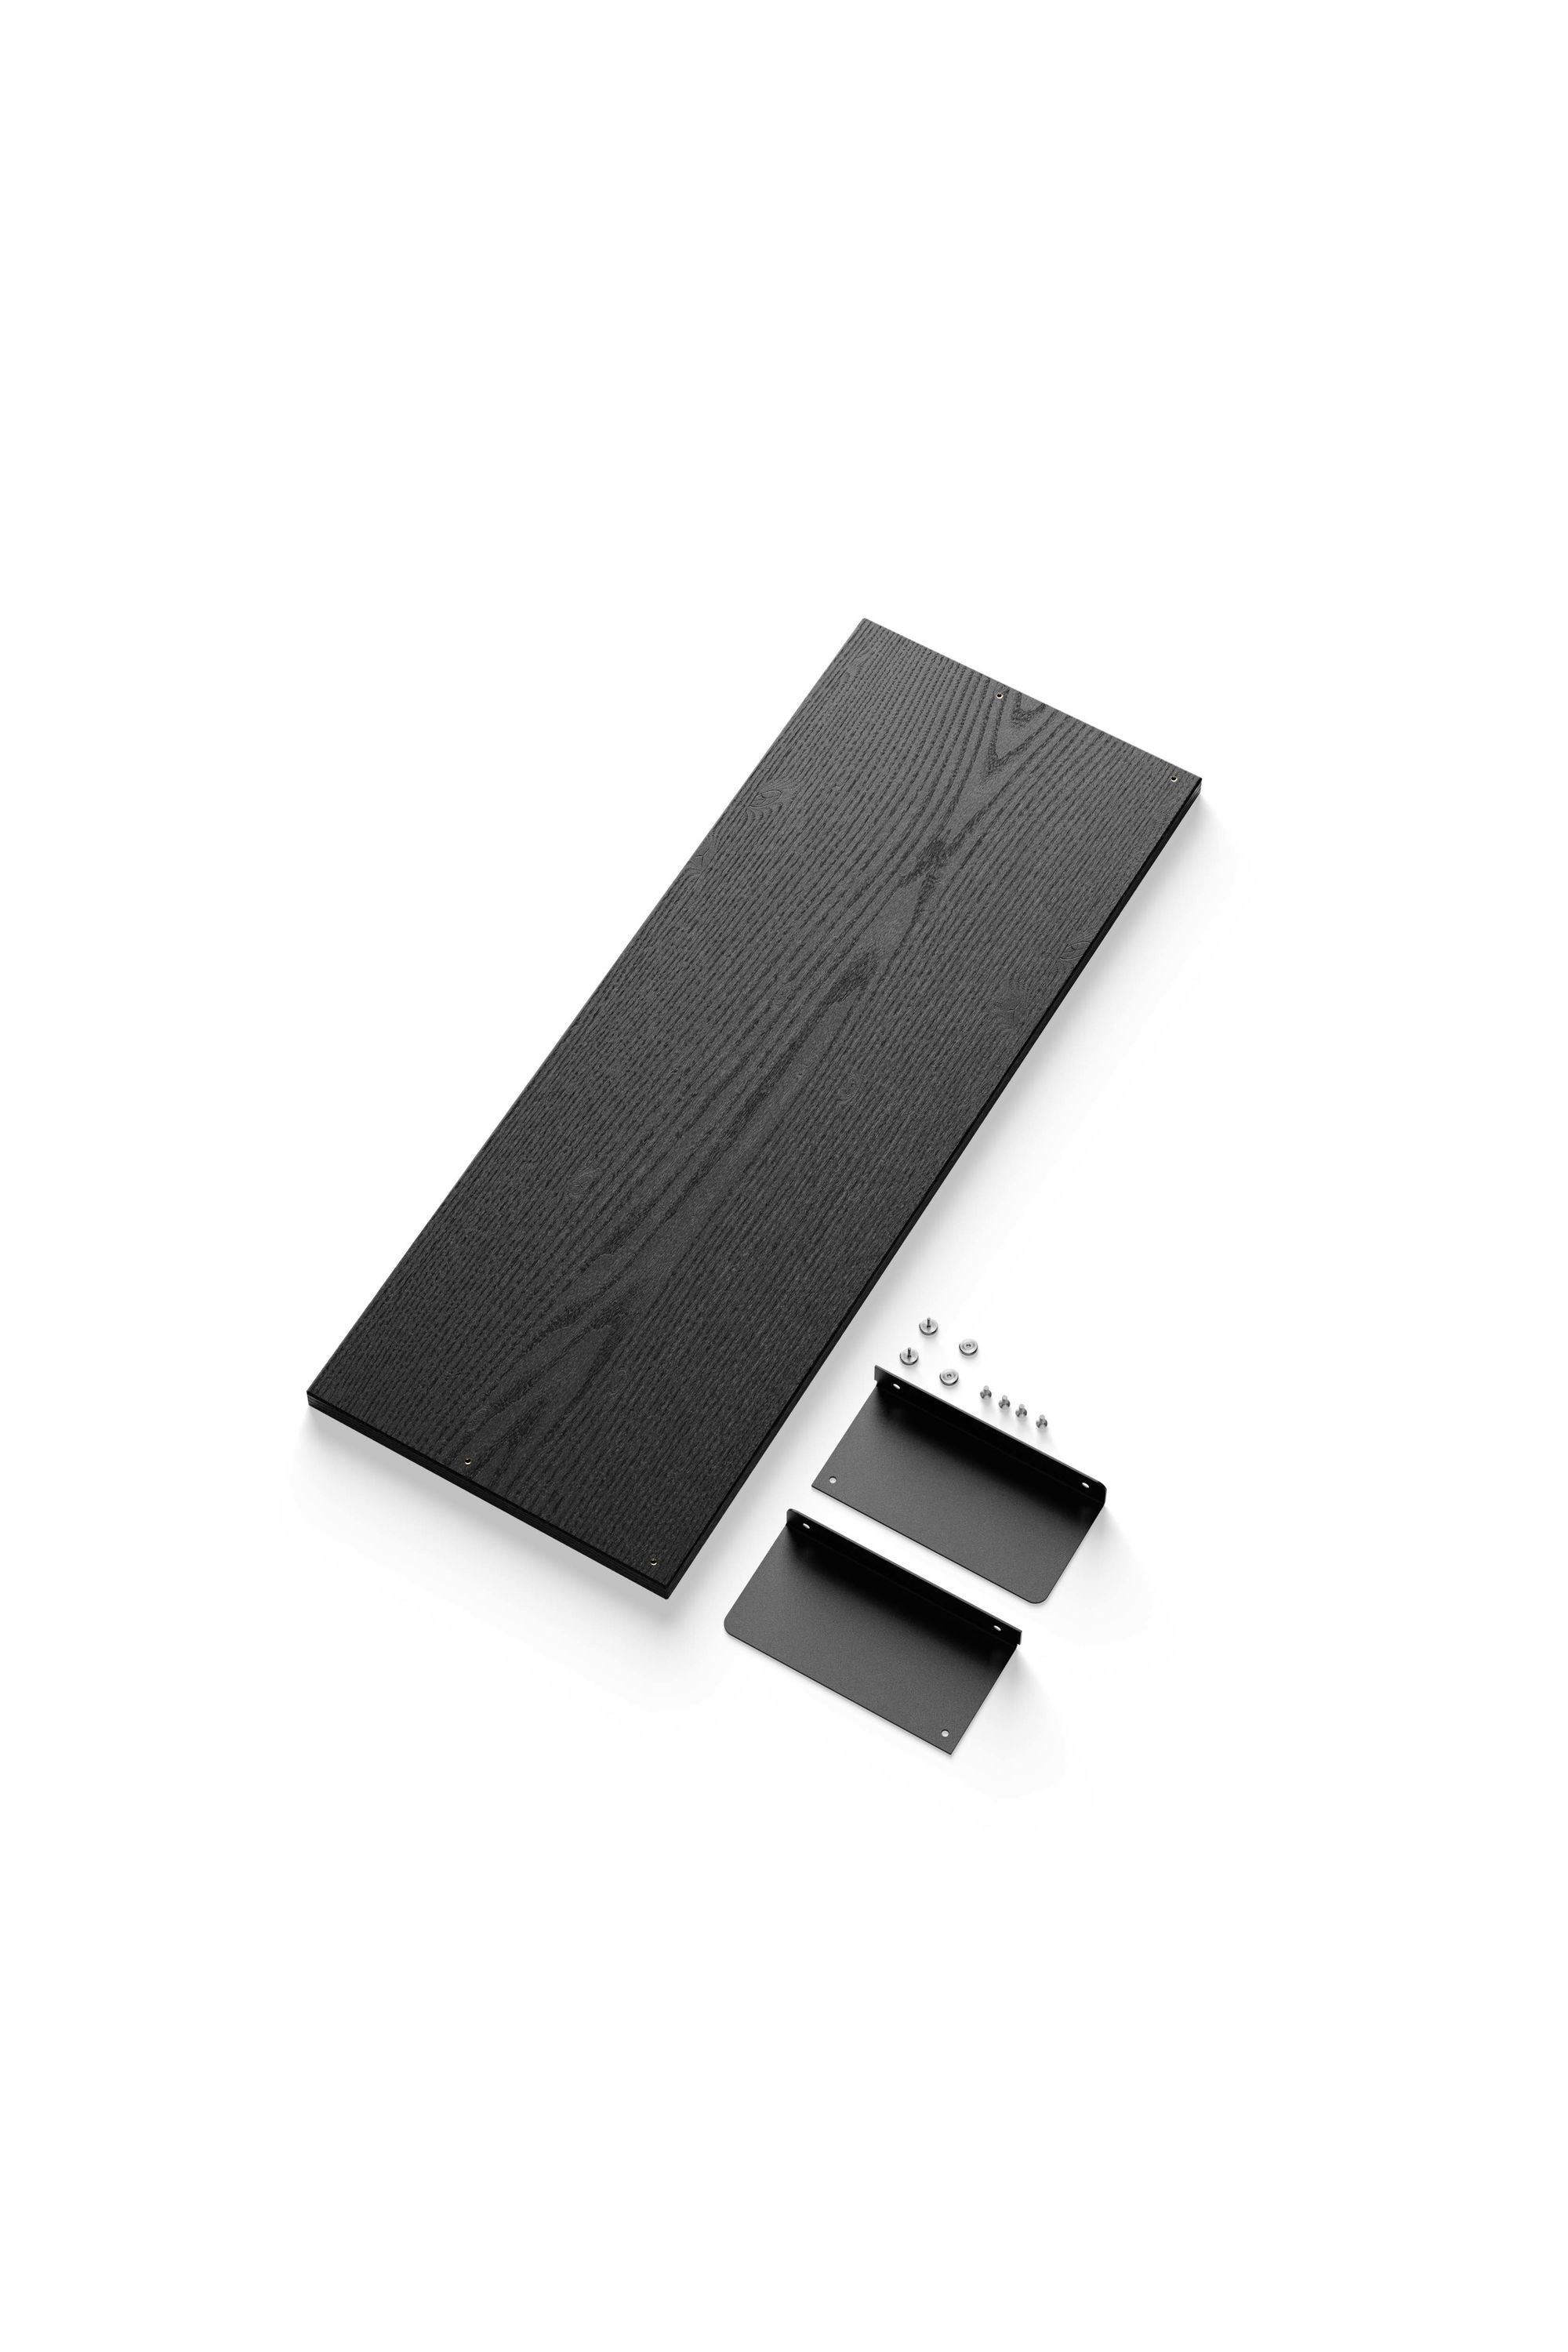 New Works Standard Shelf Kit, Black Ash/Black